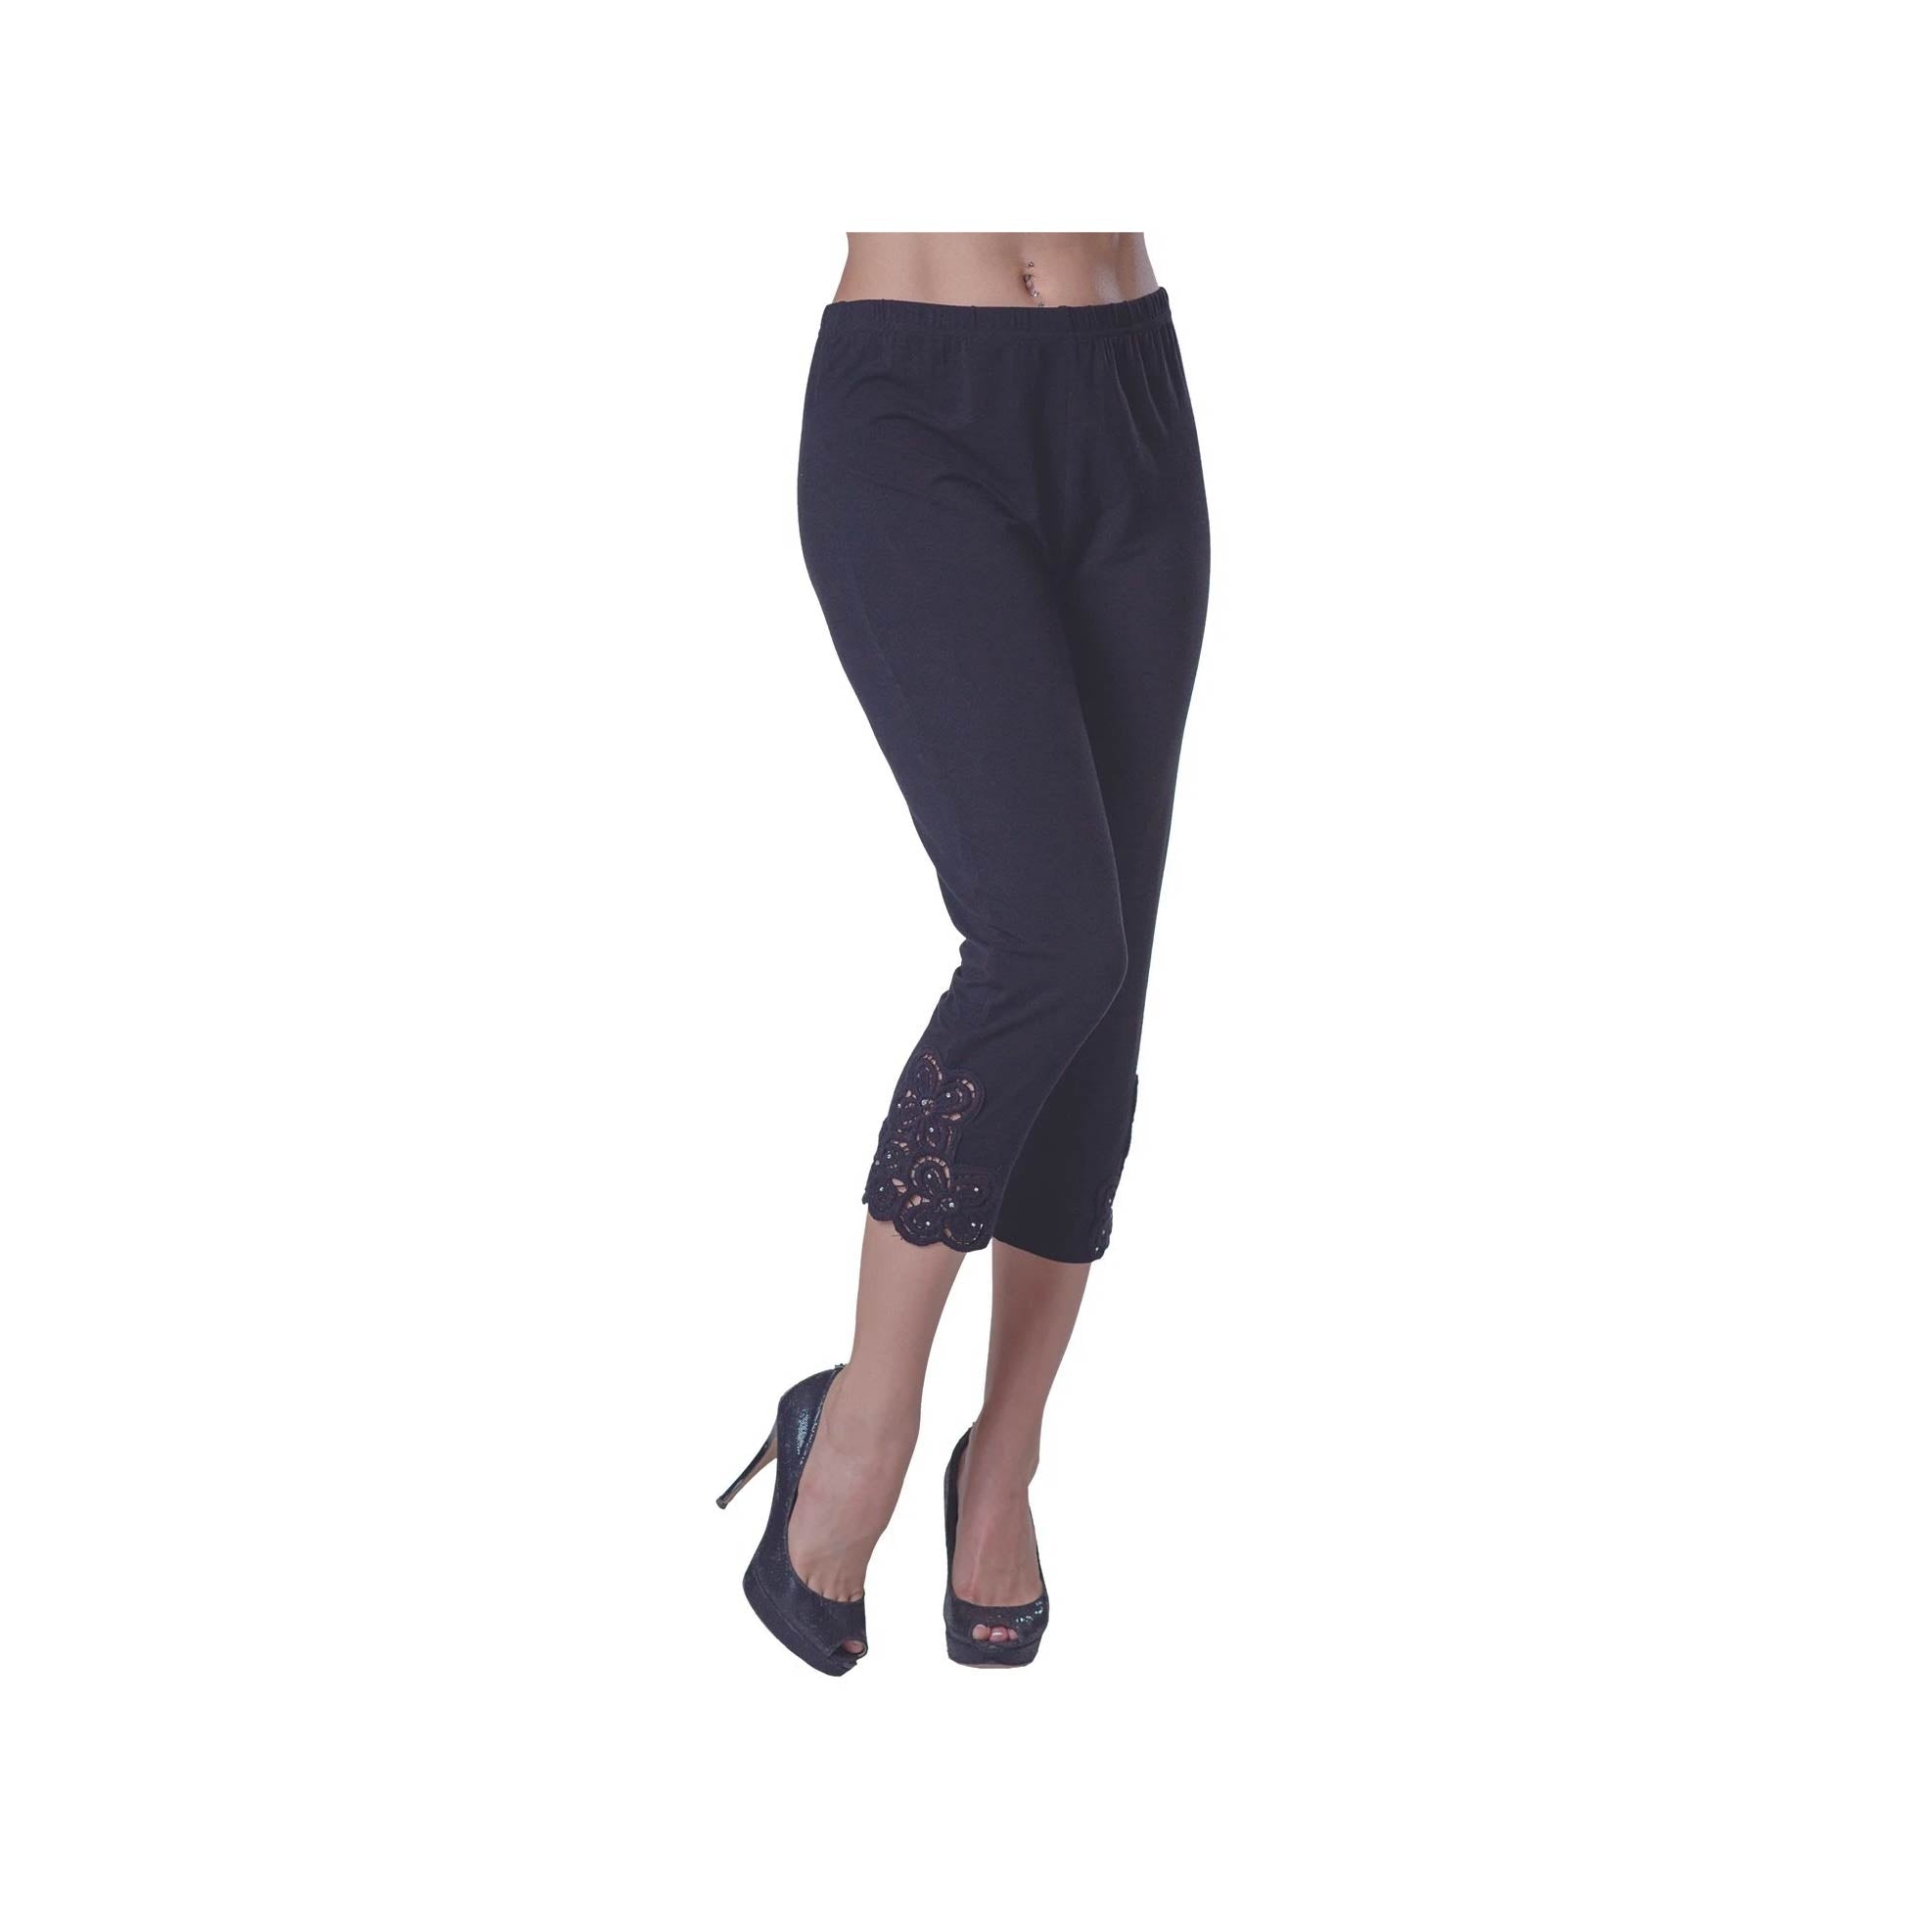 Jolie High-Waisted Capri Leggings with Hip Pockets - Pick Your Plum